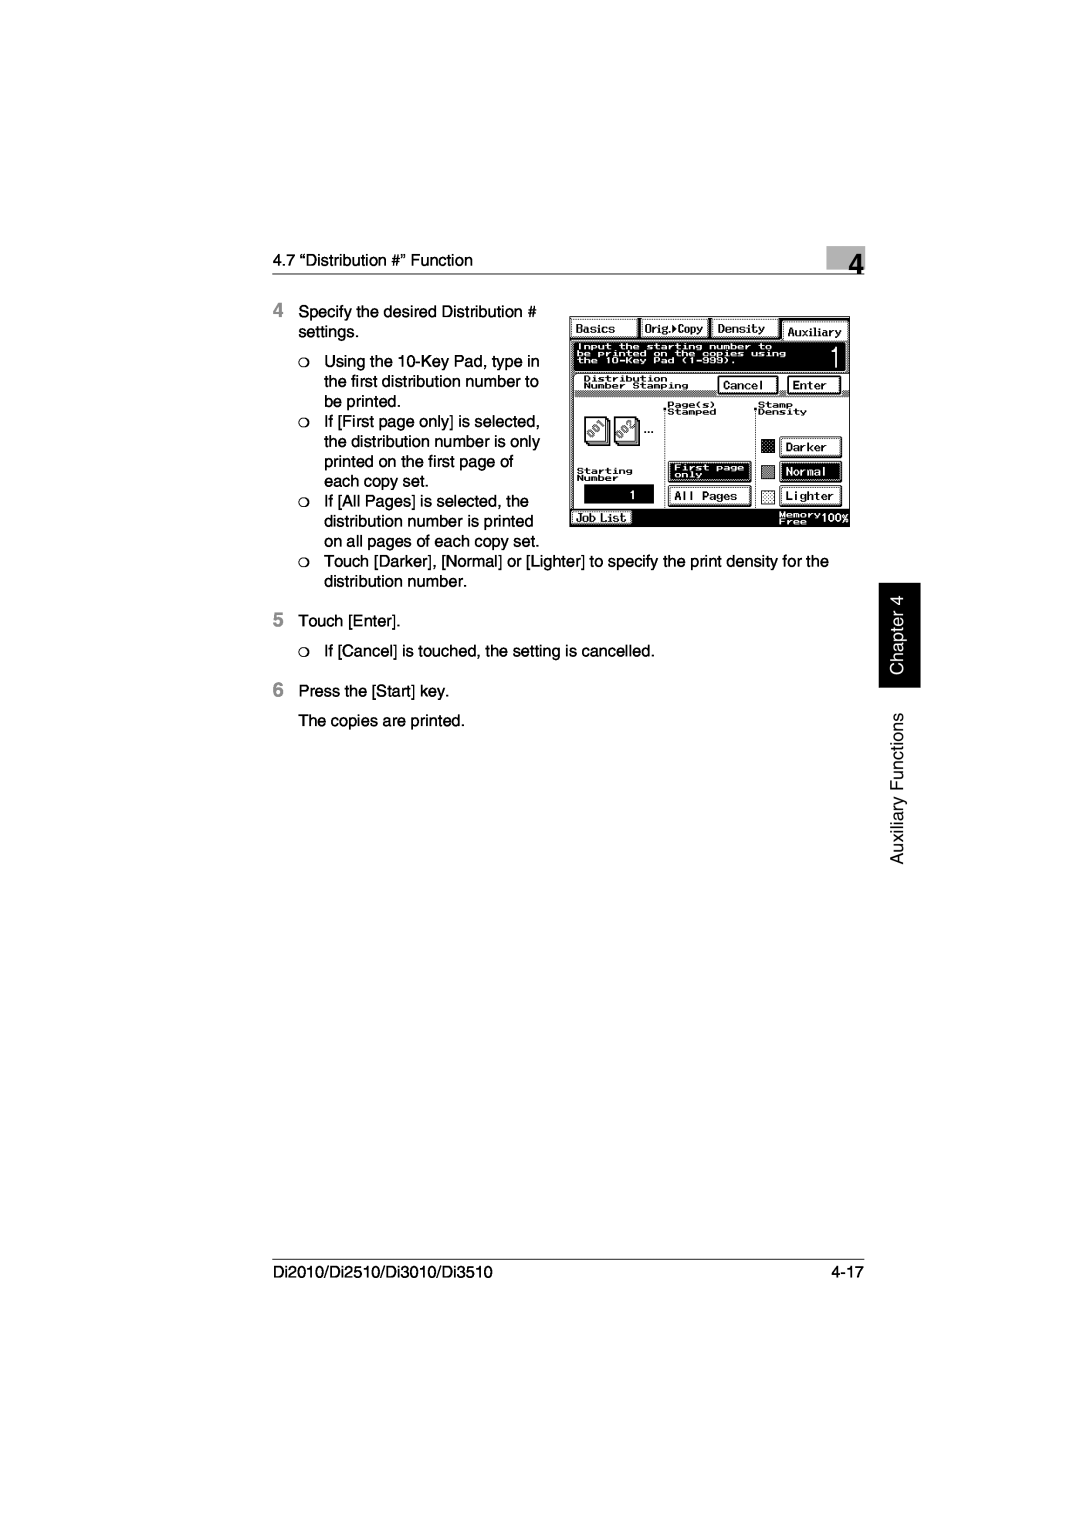 Minolta DI3010, DI2510, DI2010, Di3510 user manual Auxiliary Functions Chapter 